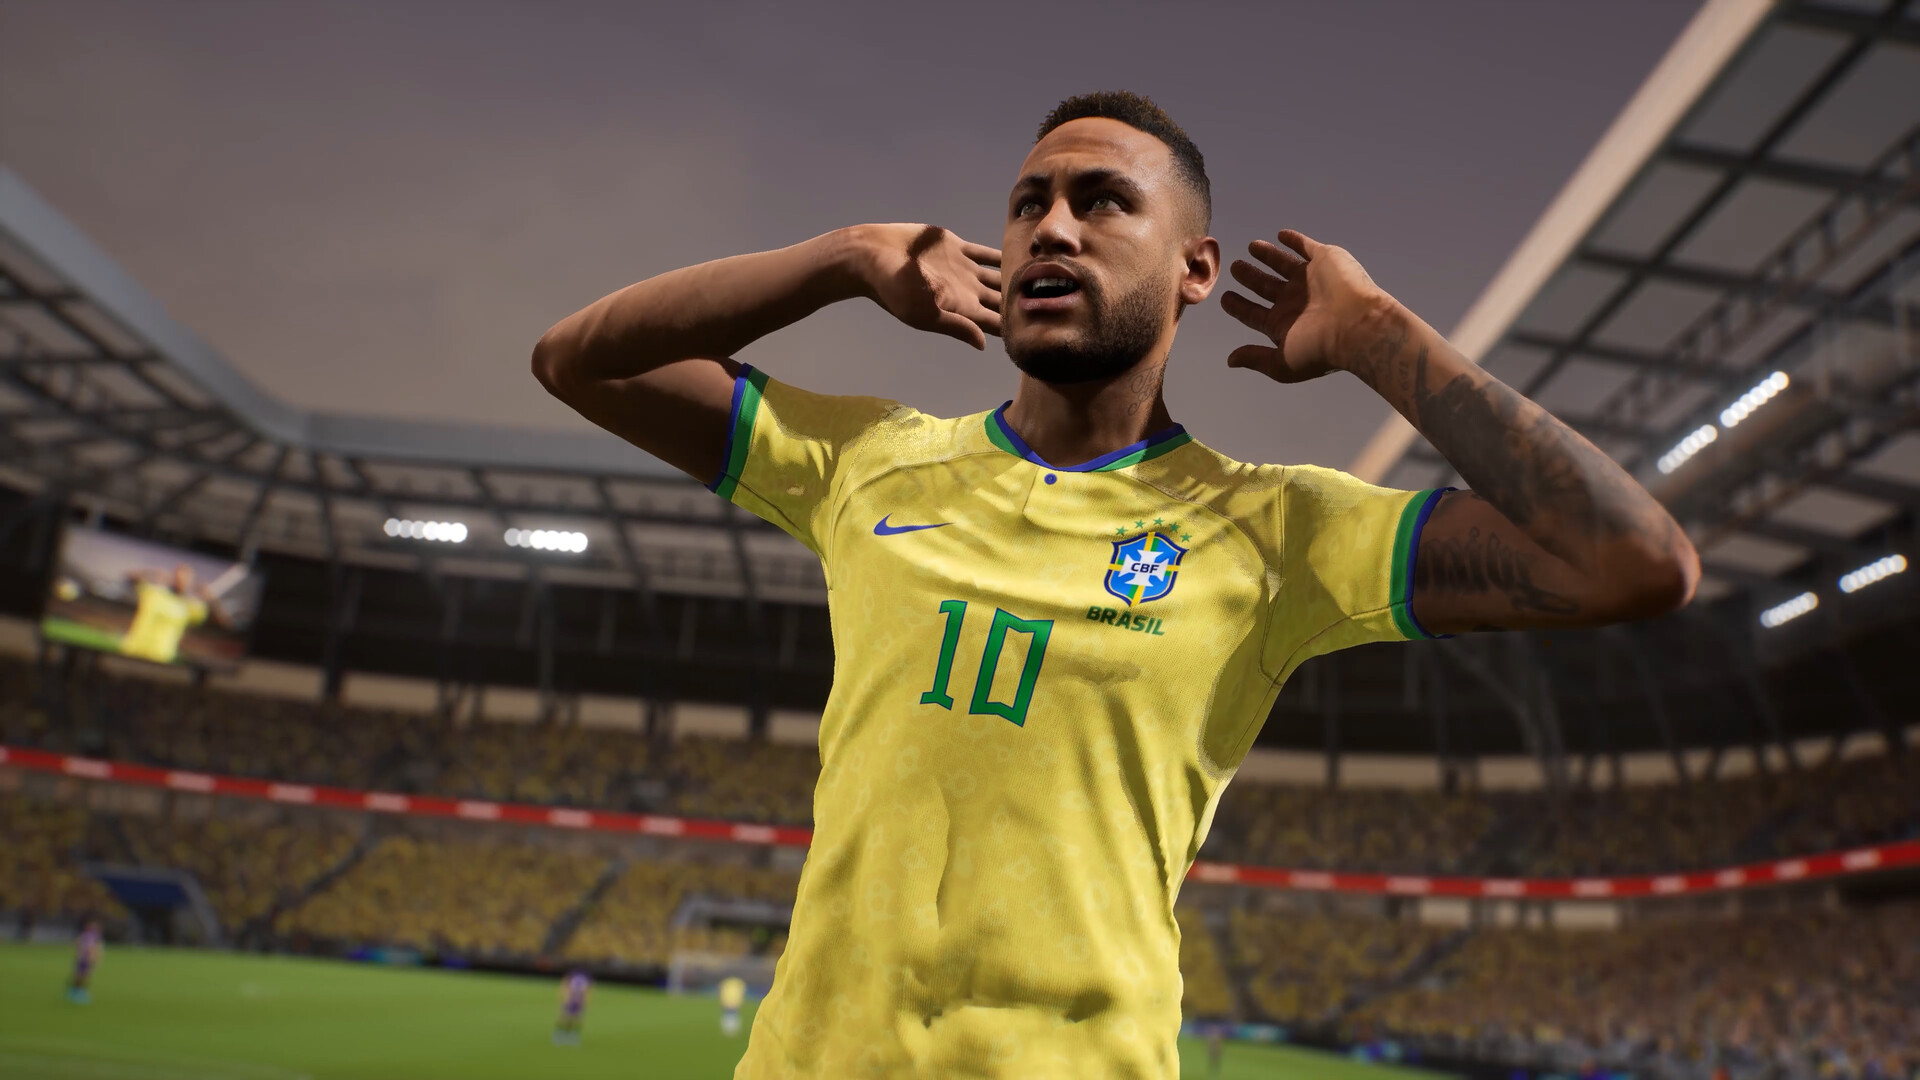 Crazy Soccer: Football Stars on Steam